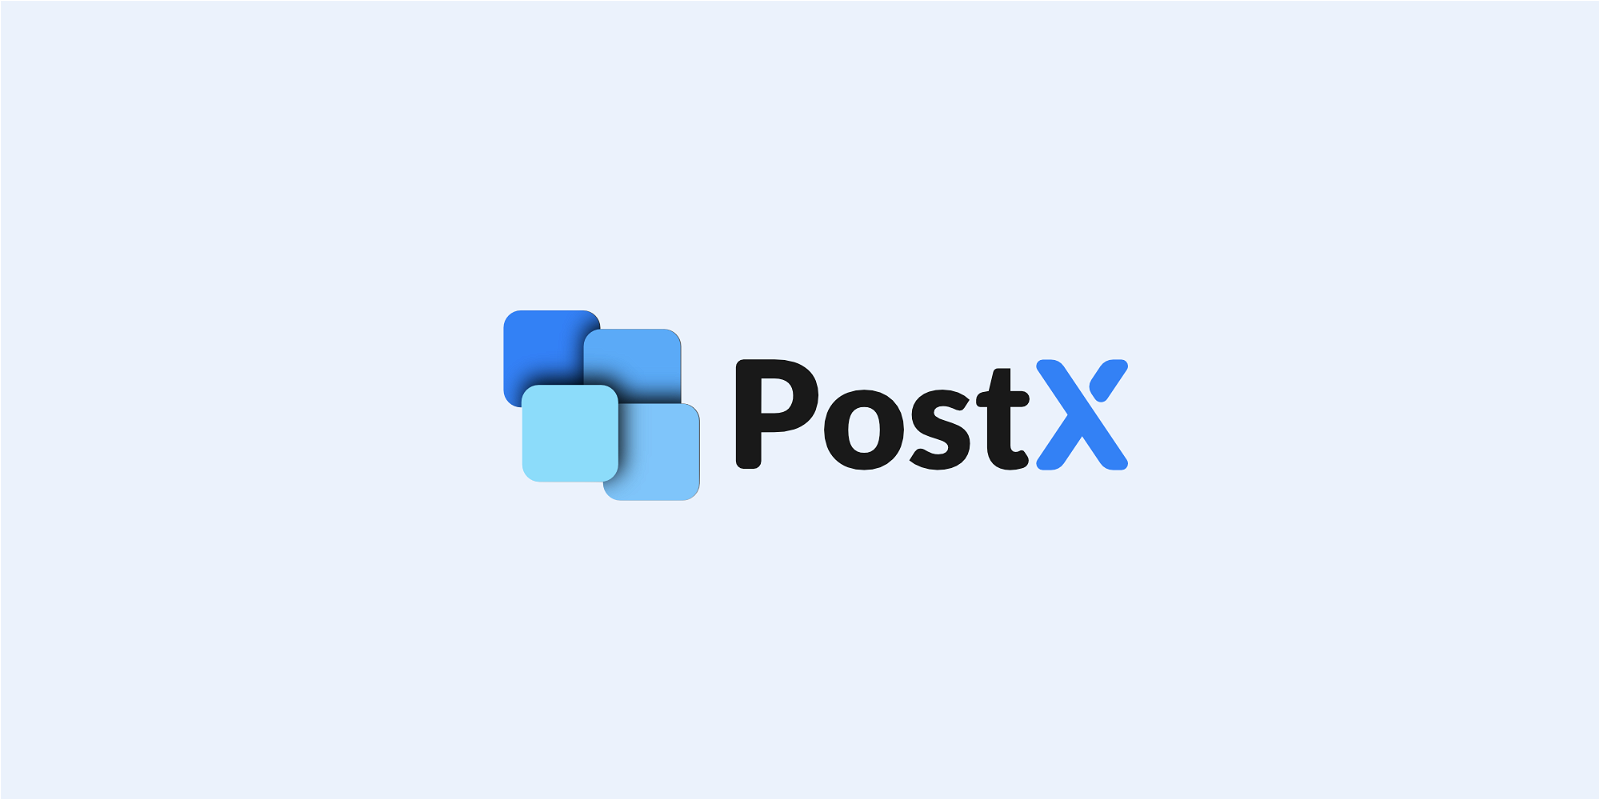 PostX